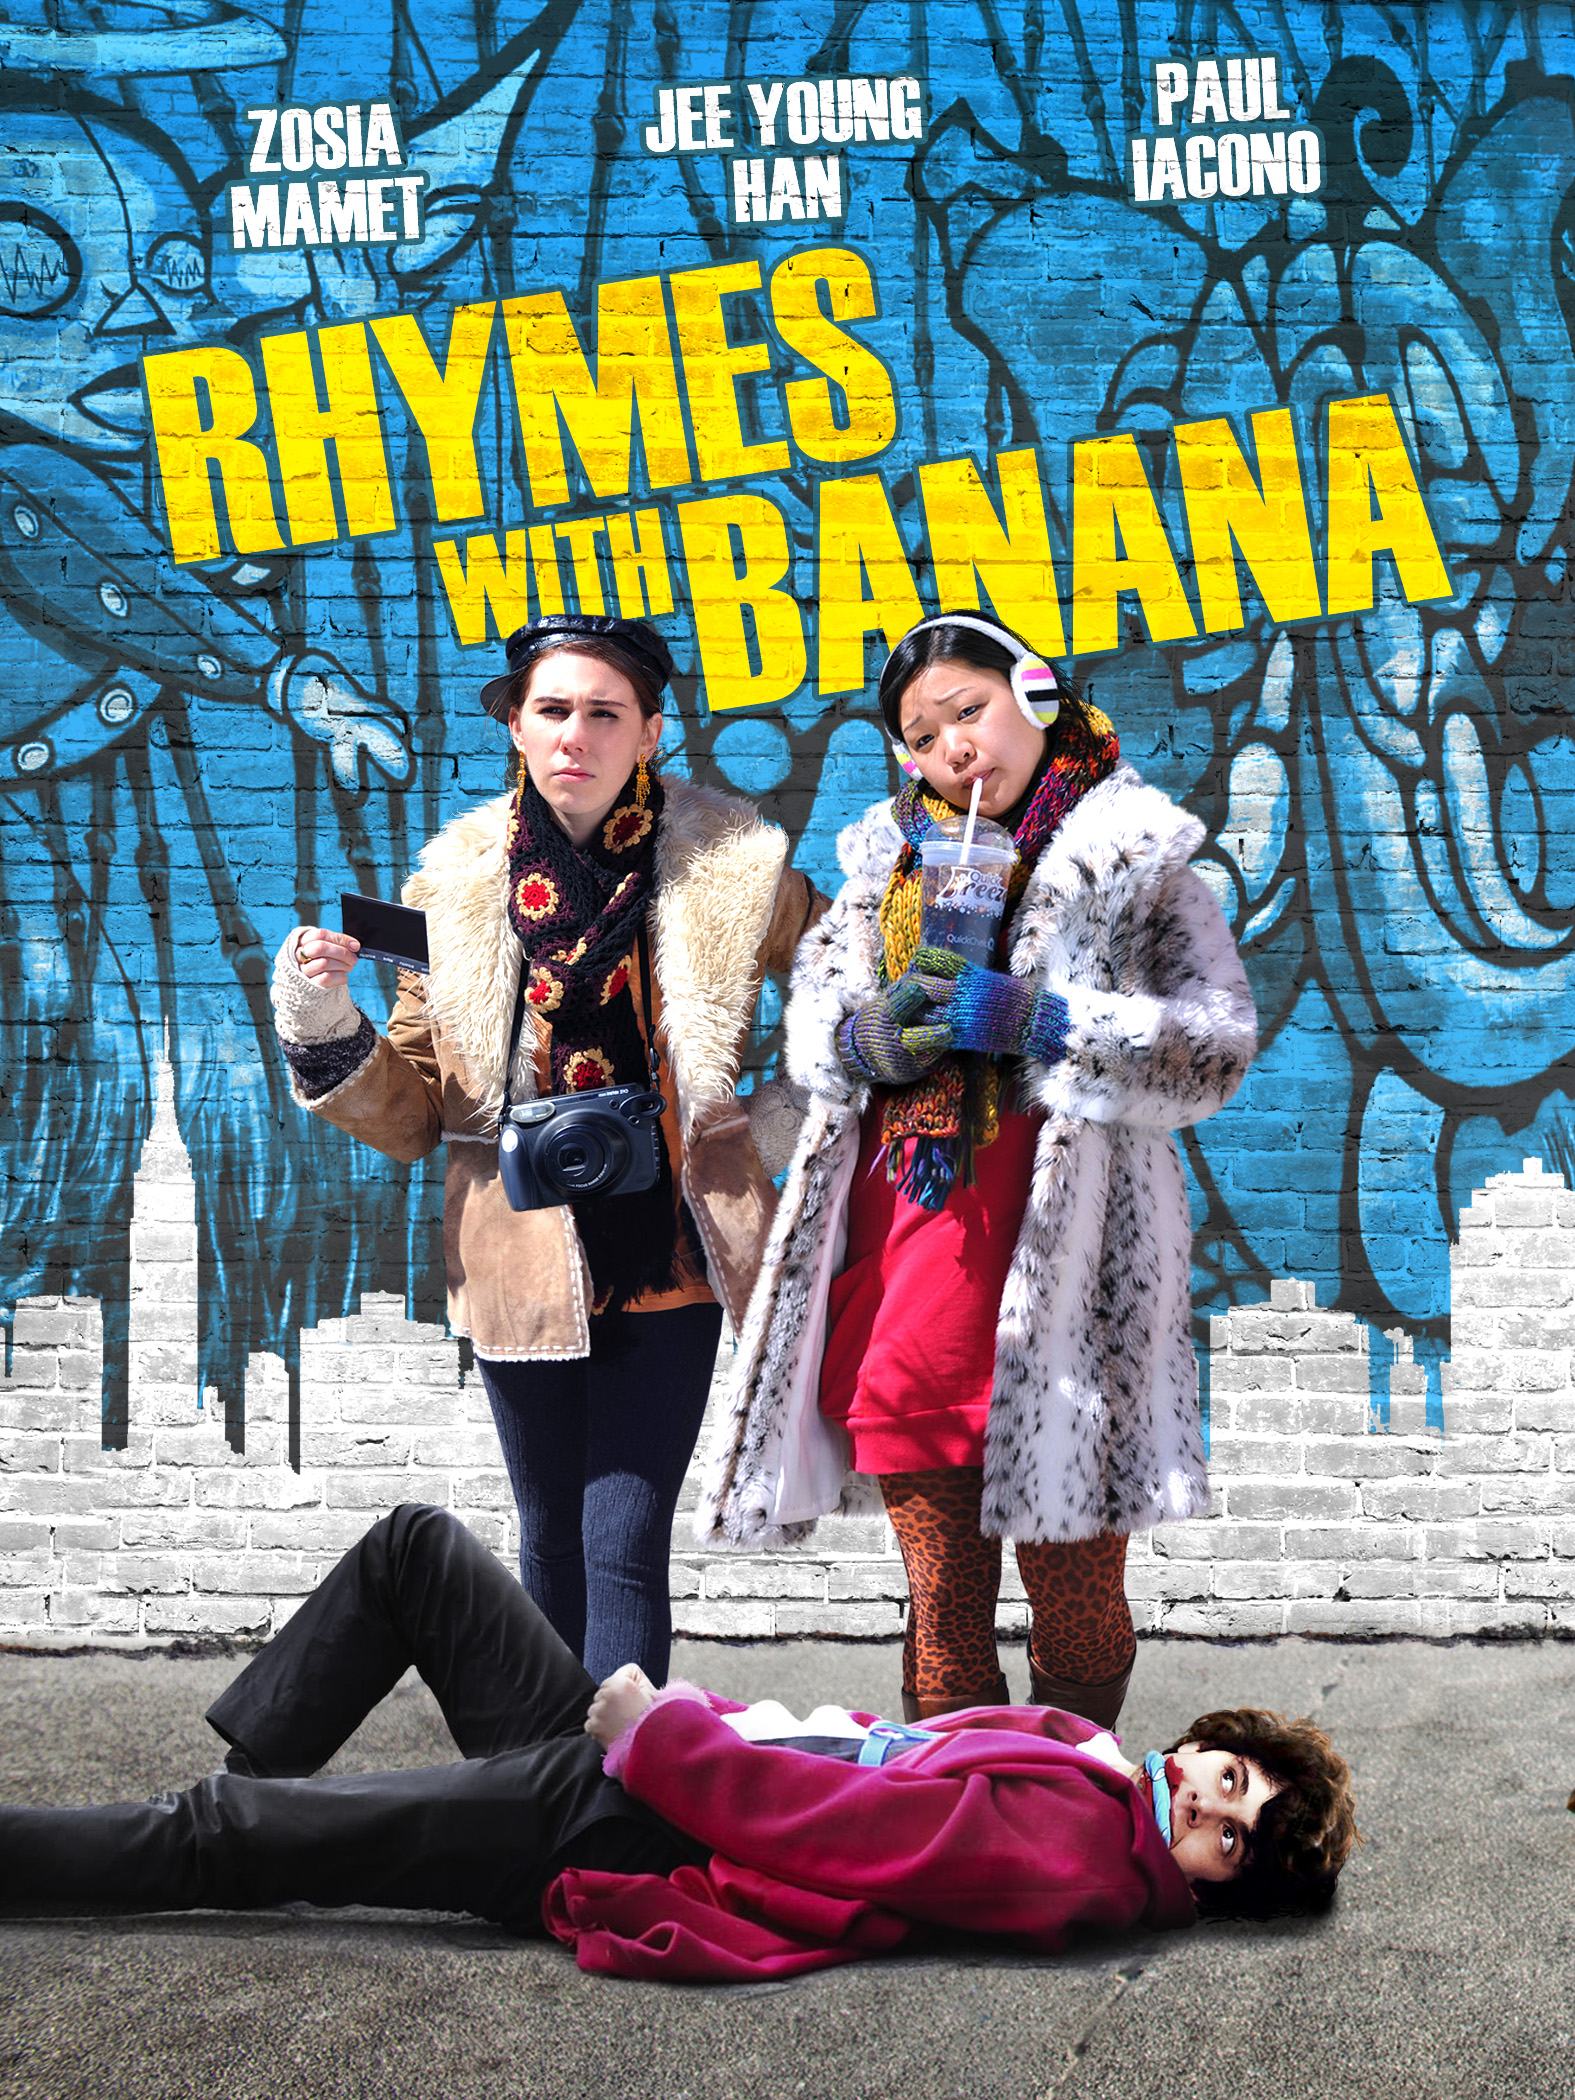 Rhymes With Banana.jpg